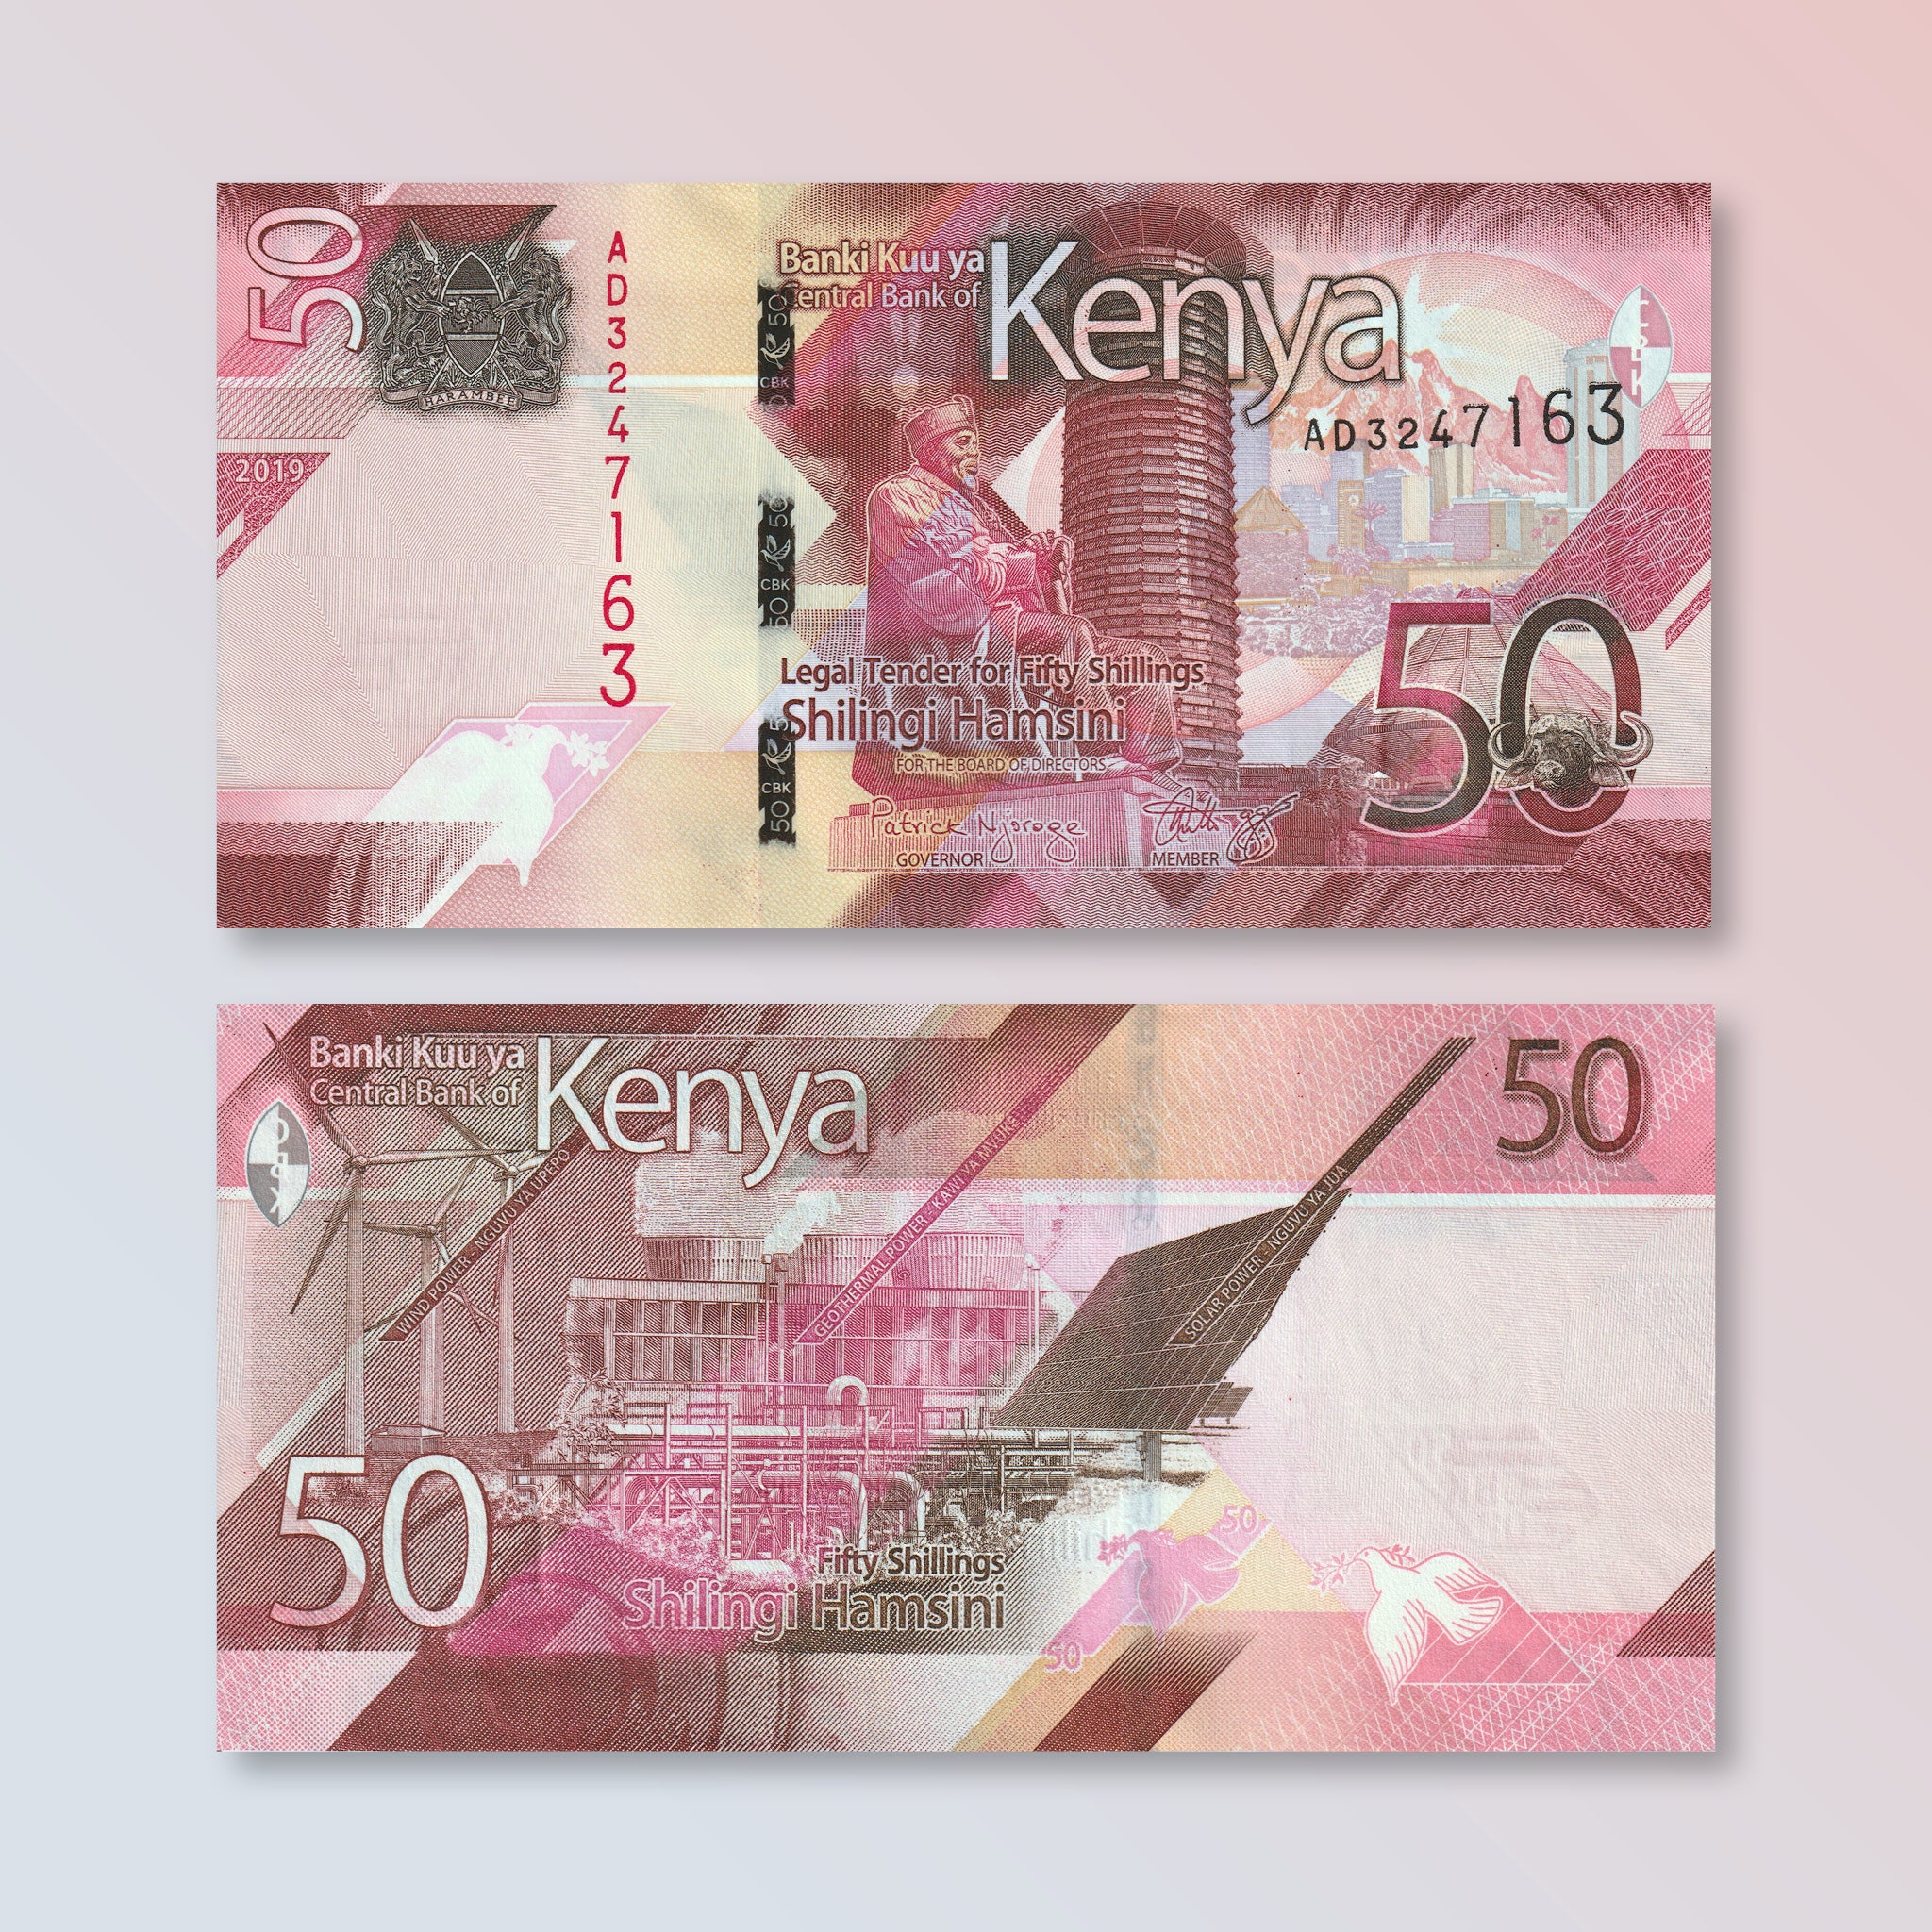 Kenya 50 Shillings, 2019, B144a, UNC - Robert's World Money - World Banknotes